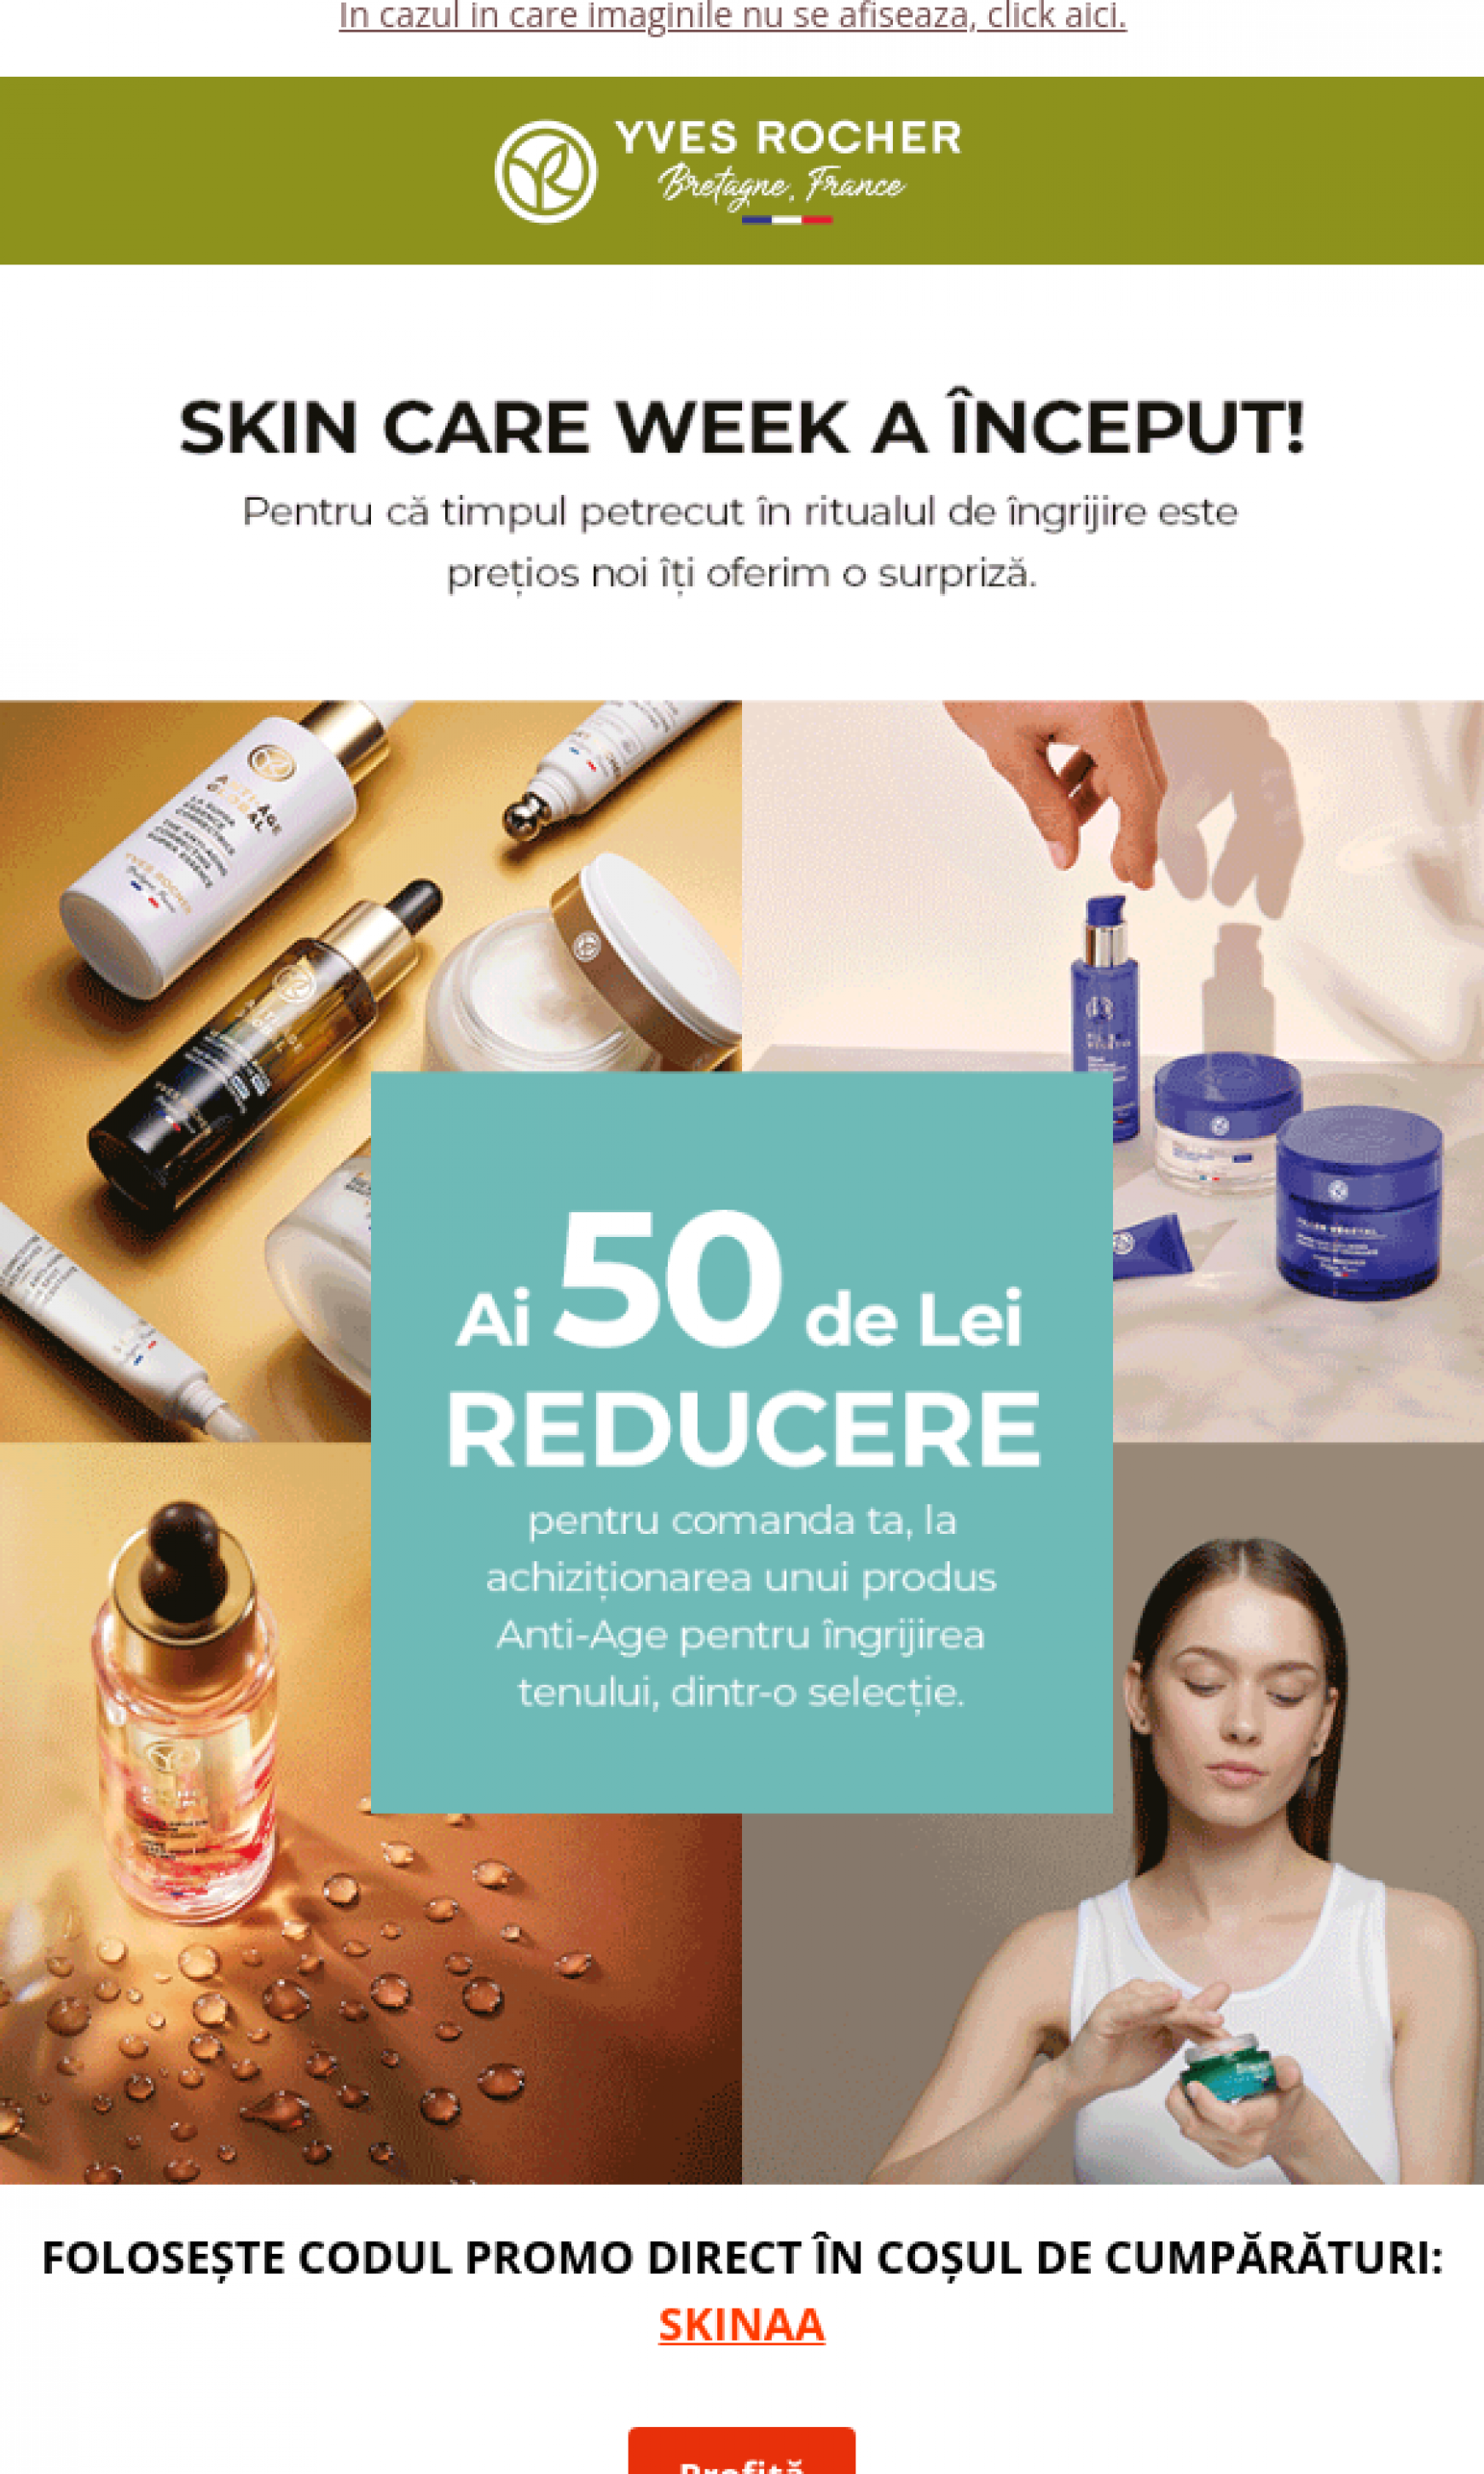 yves-rocher - Yves Rocher - Skin Care Week îți aduce reduceri: -50 LEI! - page: 1